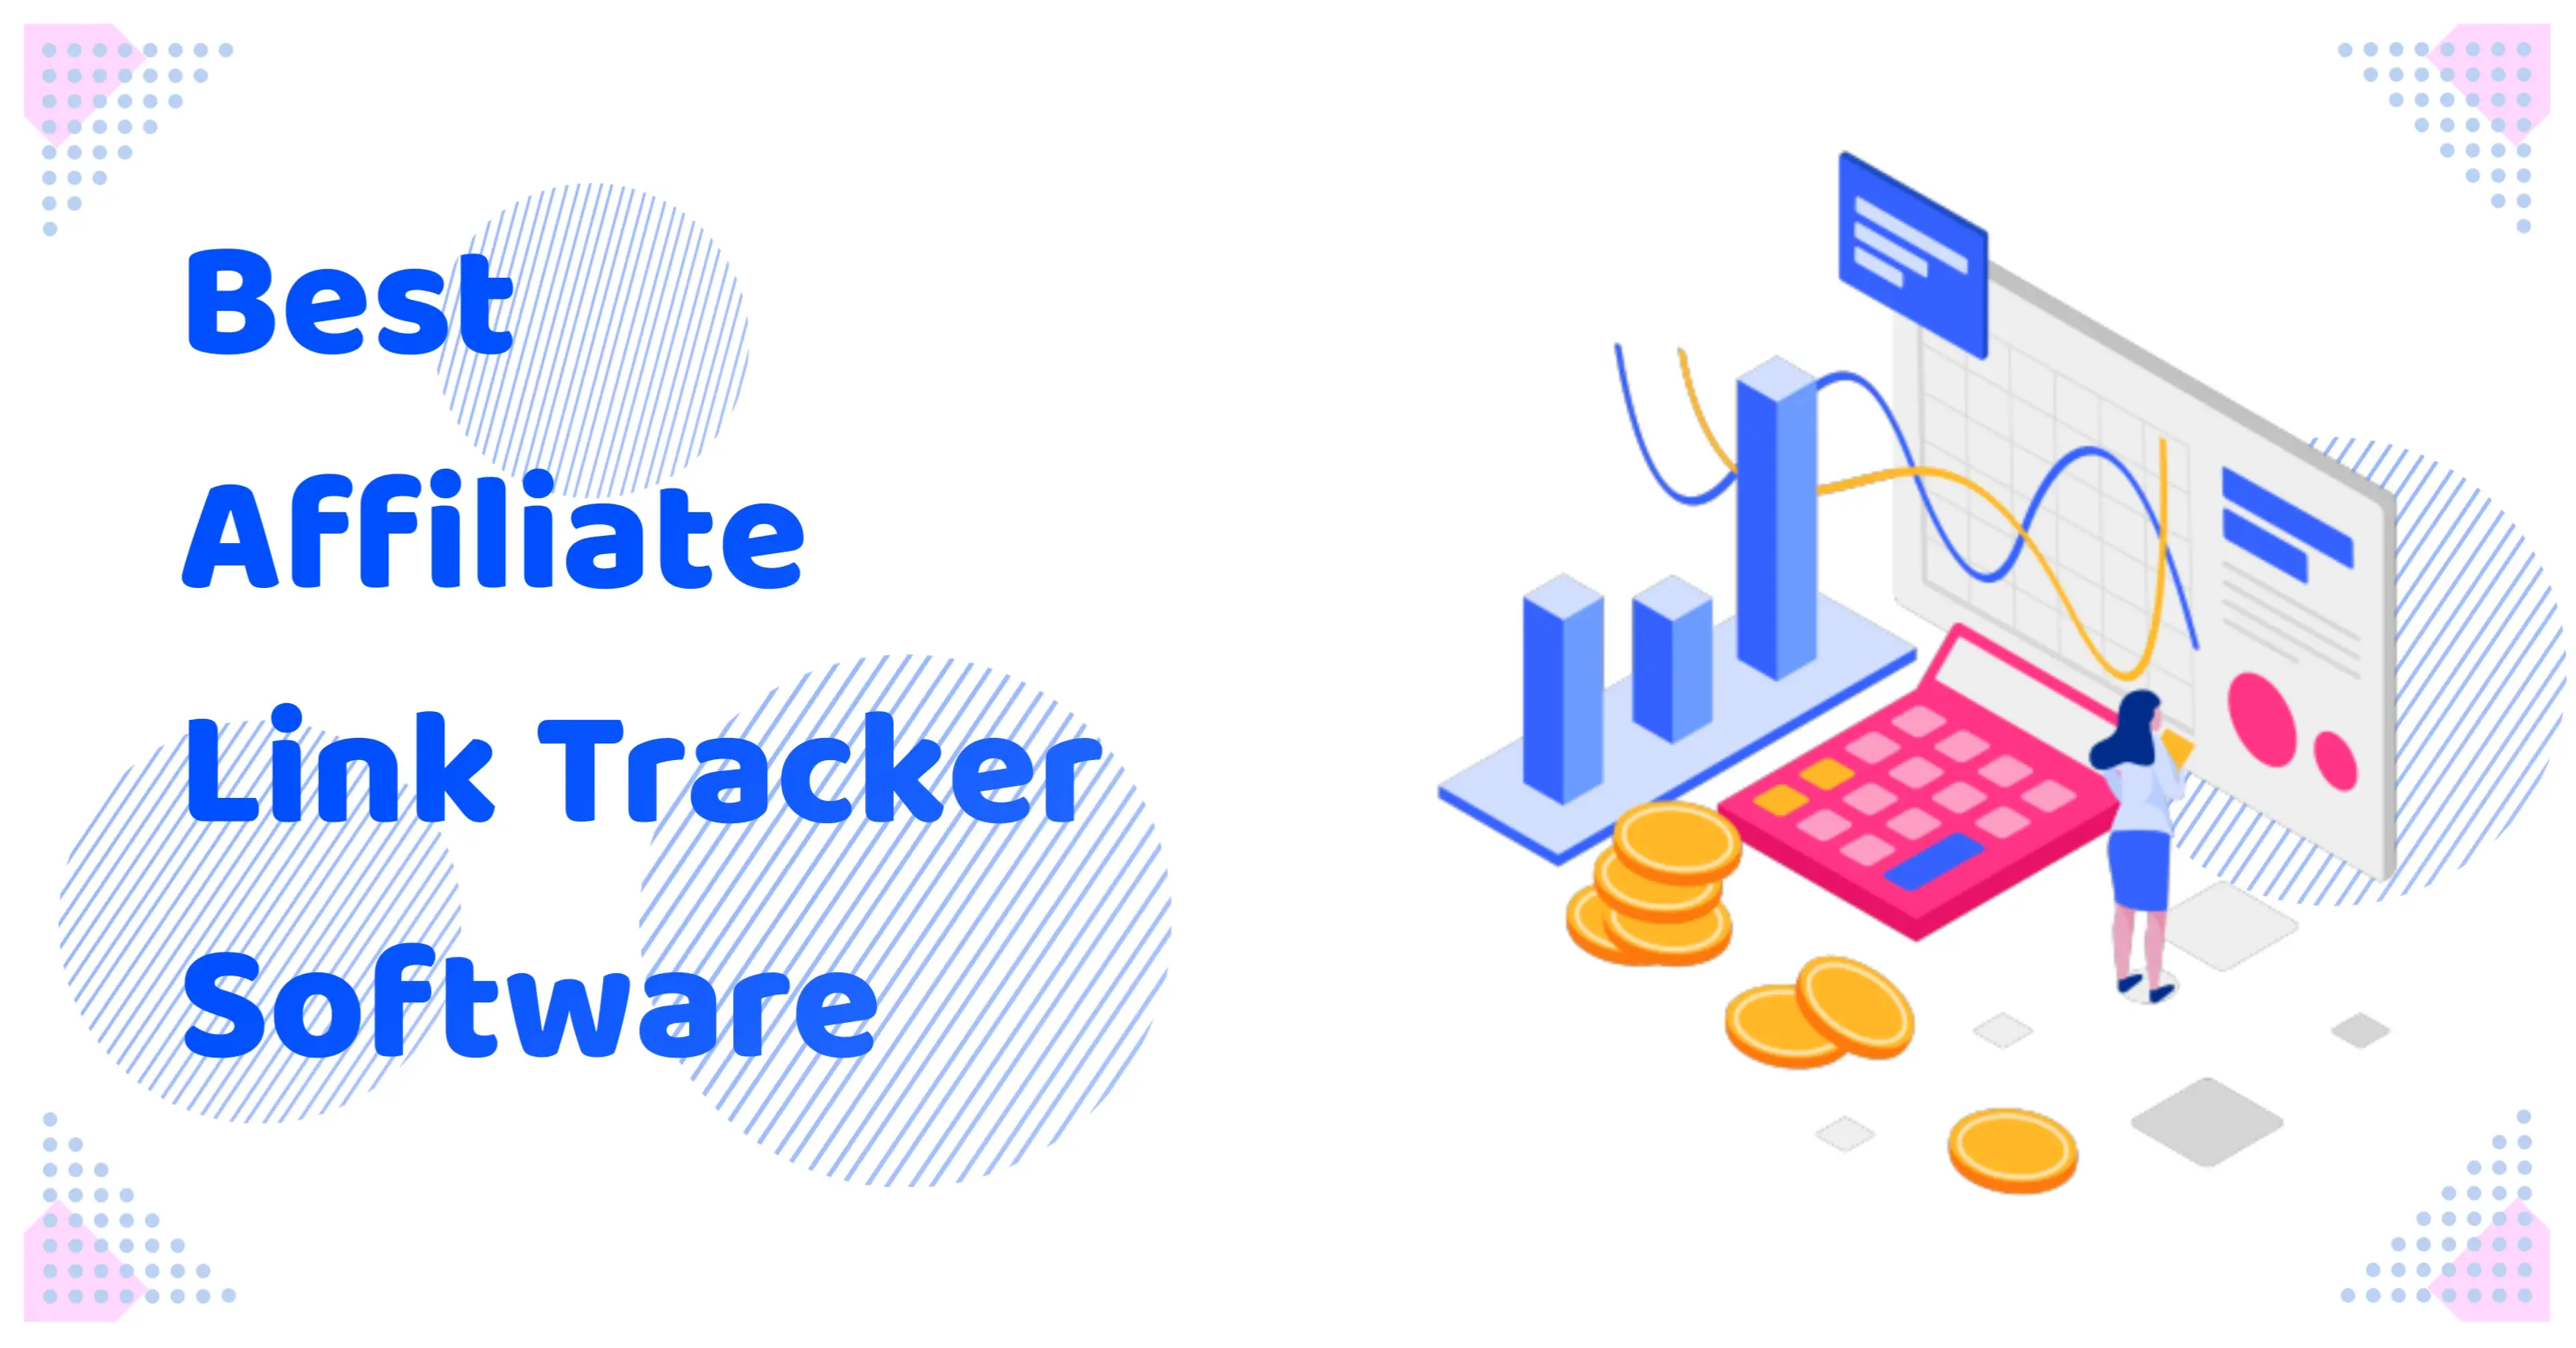 Best Affiliate Link Tracker Software